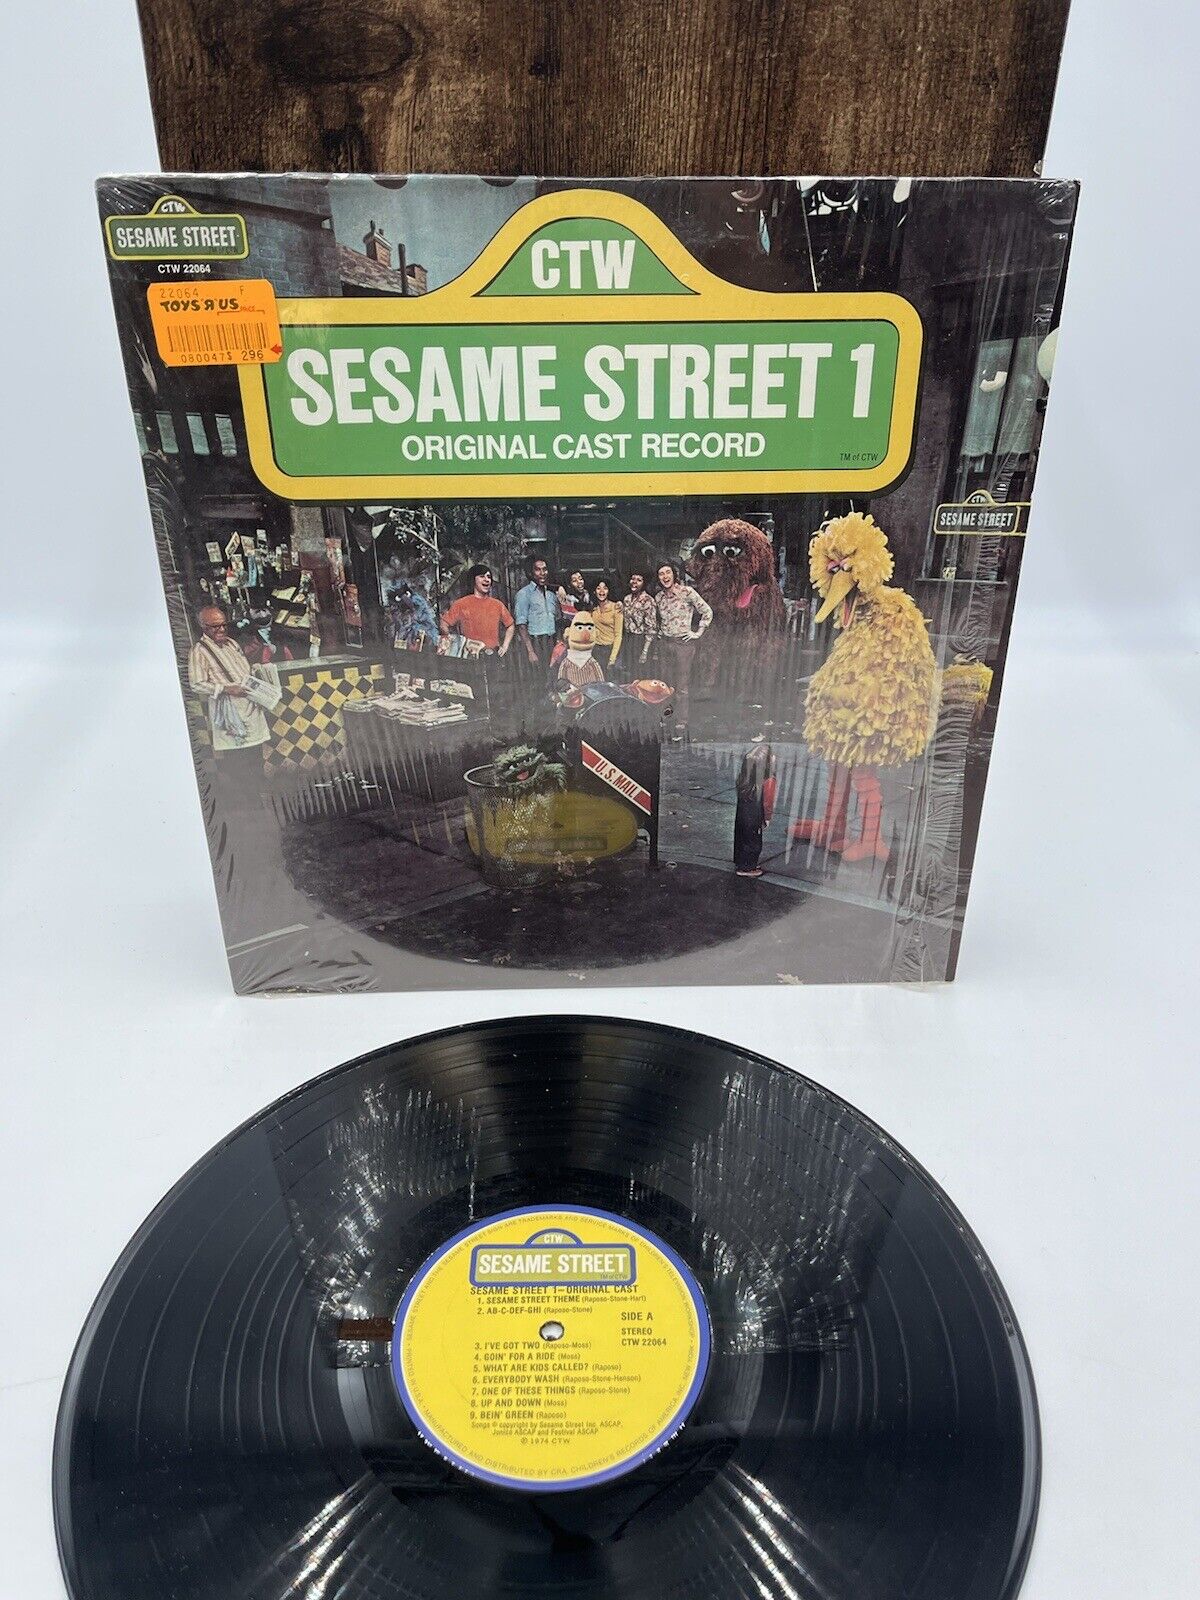 Vintage ‘Sesame Street 1’ Vinyl Record - Original Cast Recordings, 1974